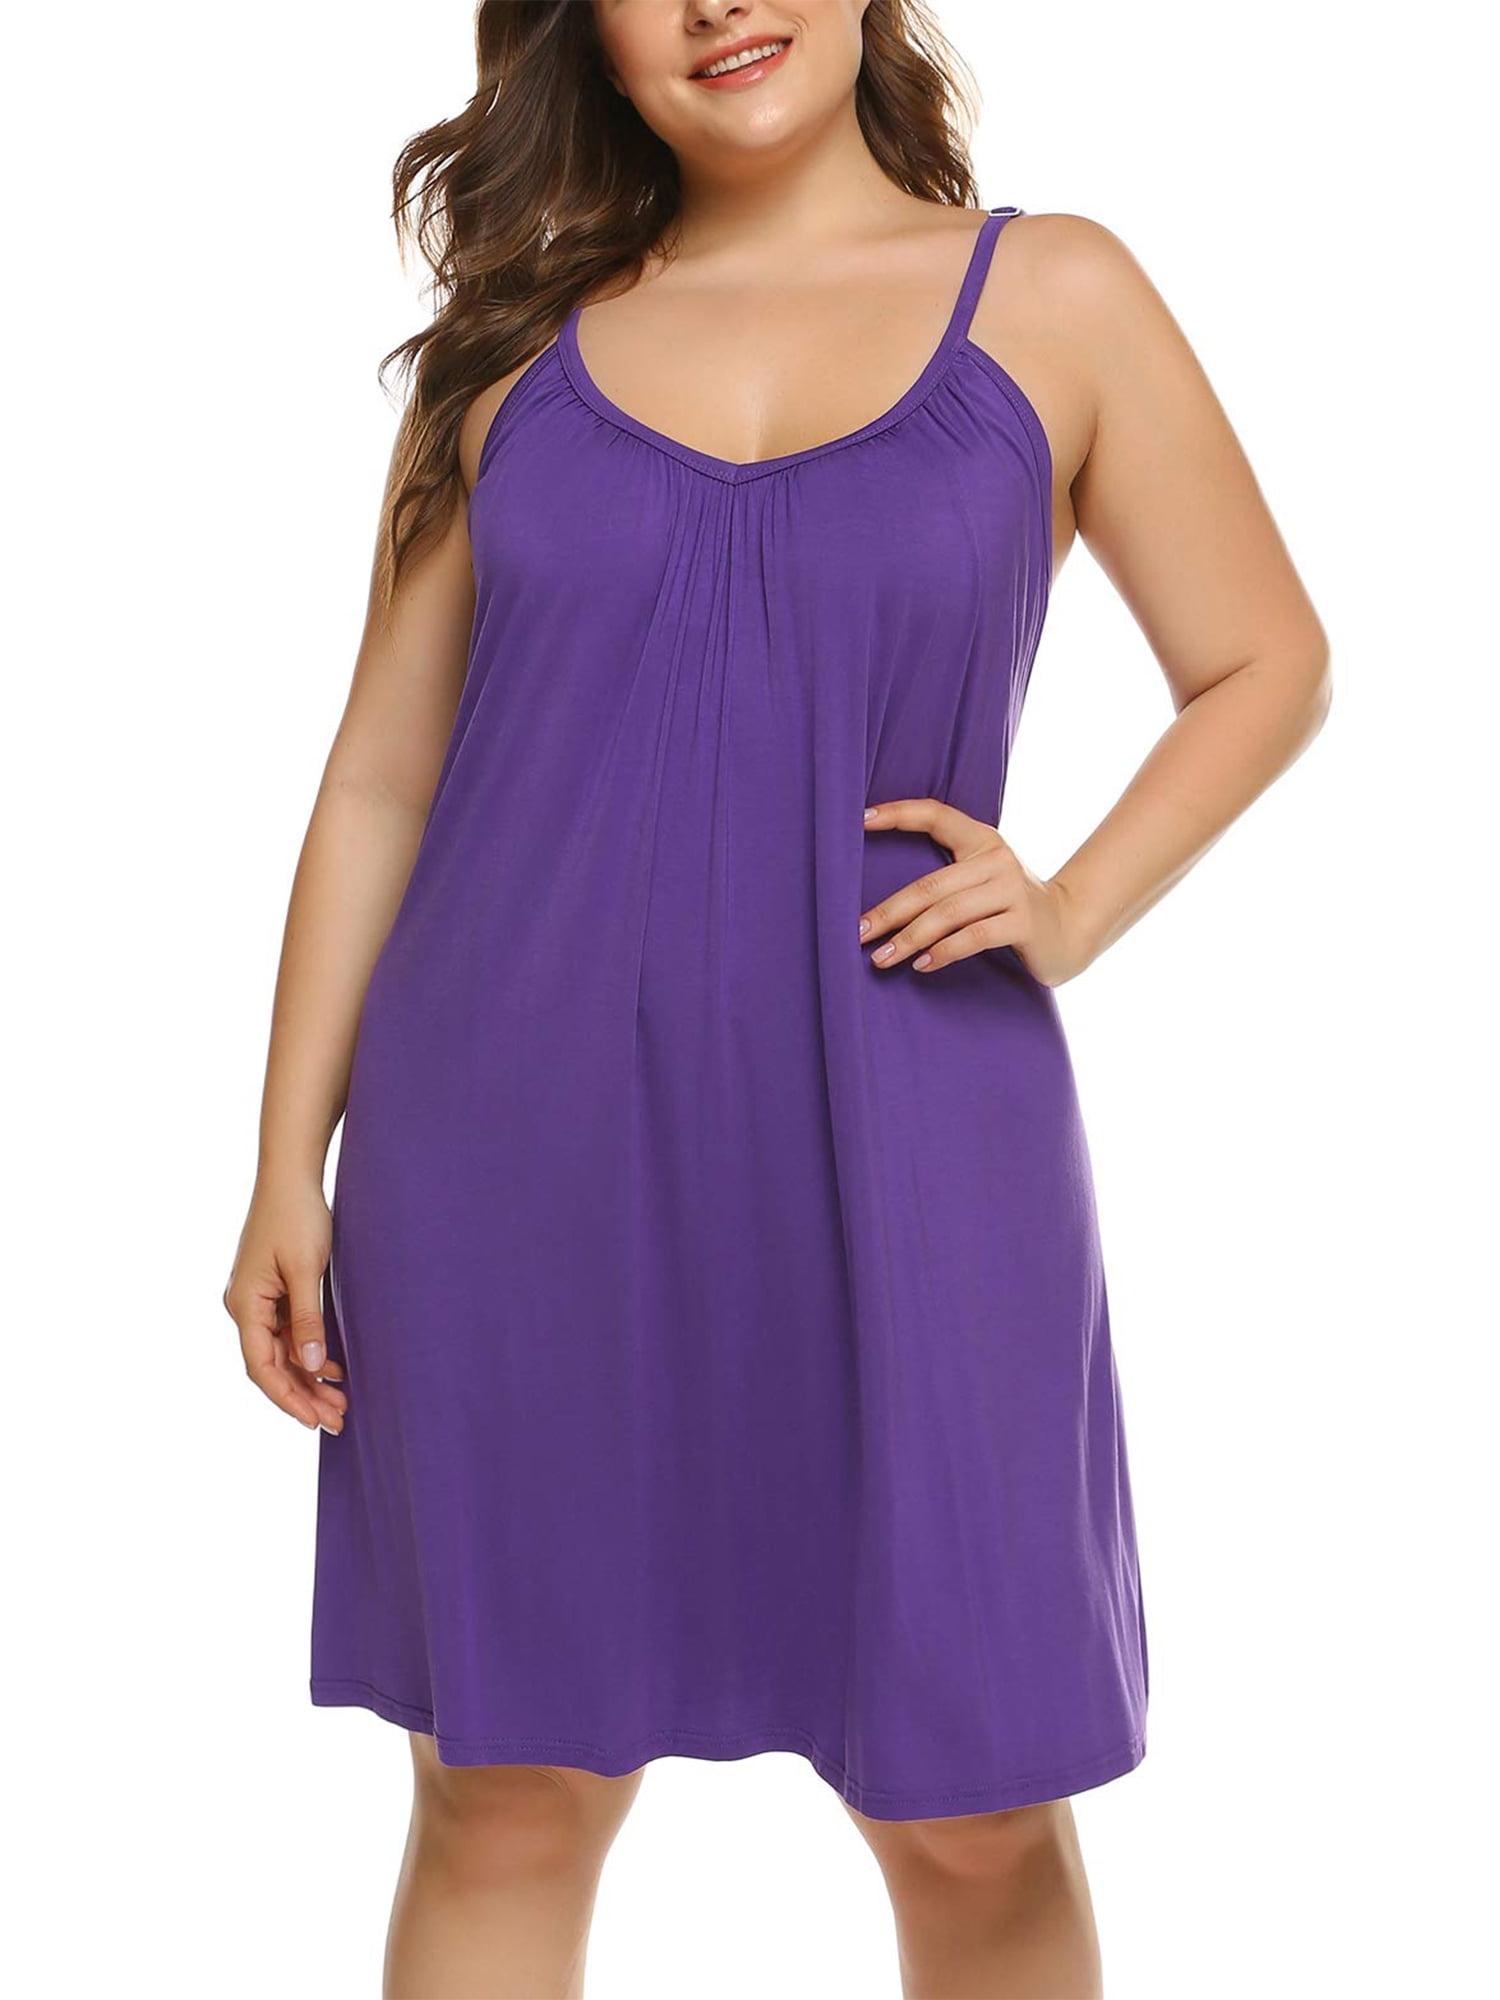 Plus Size Nightgowns for Women Sleeveless Sleepwear Soft Modal